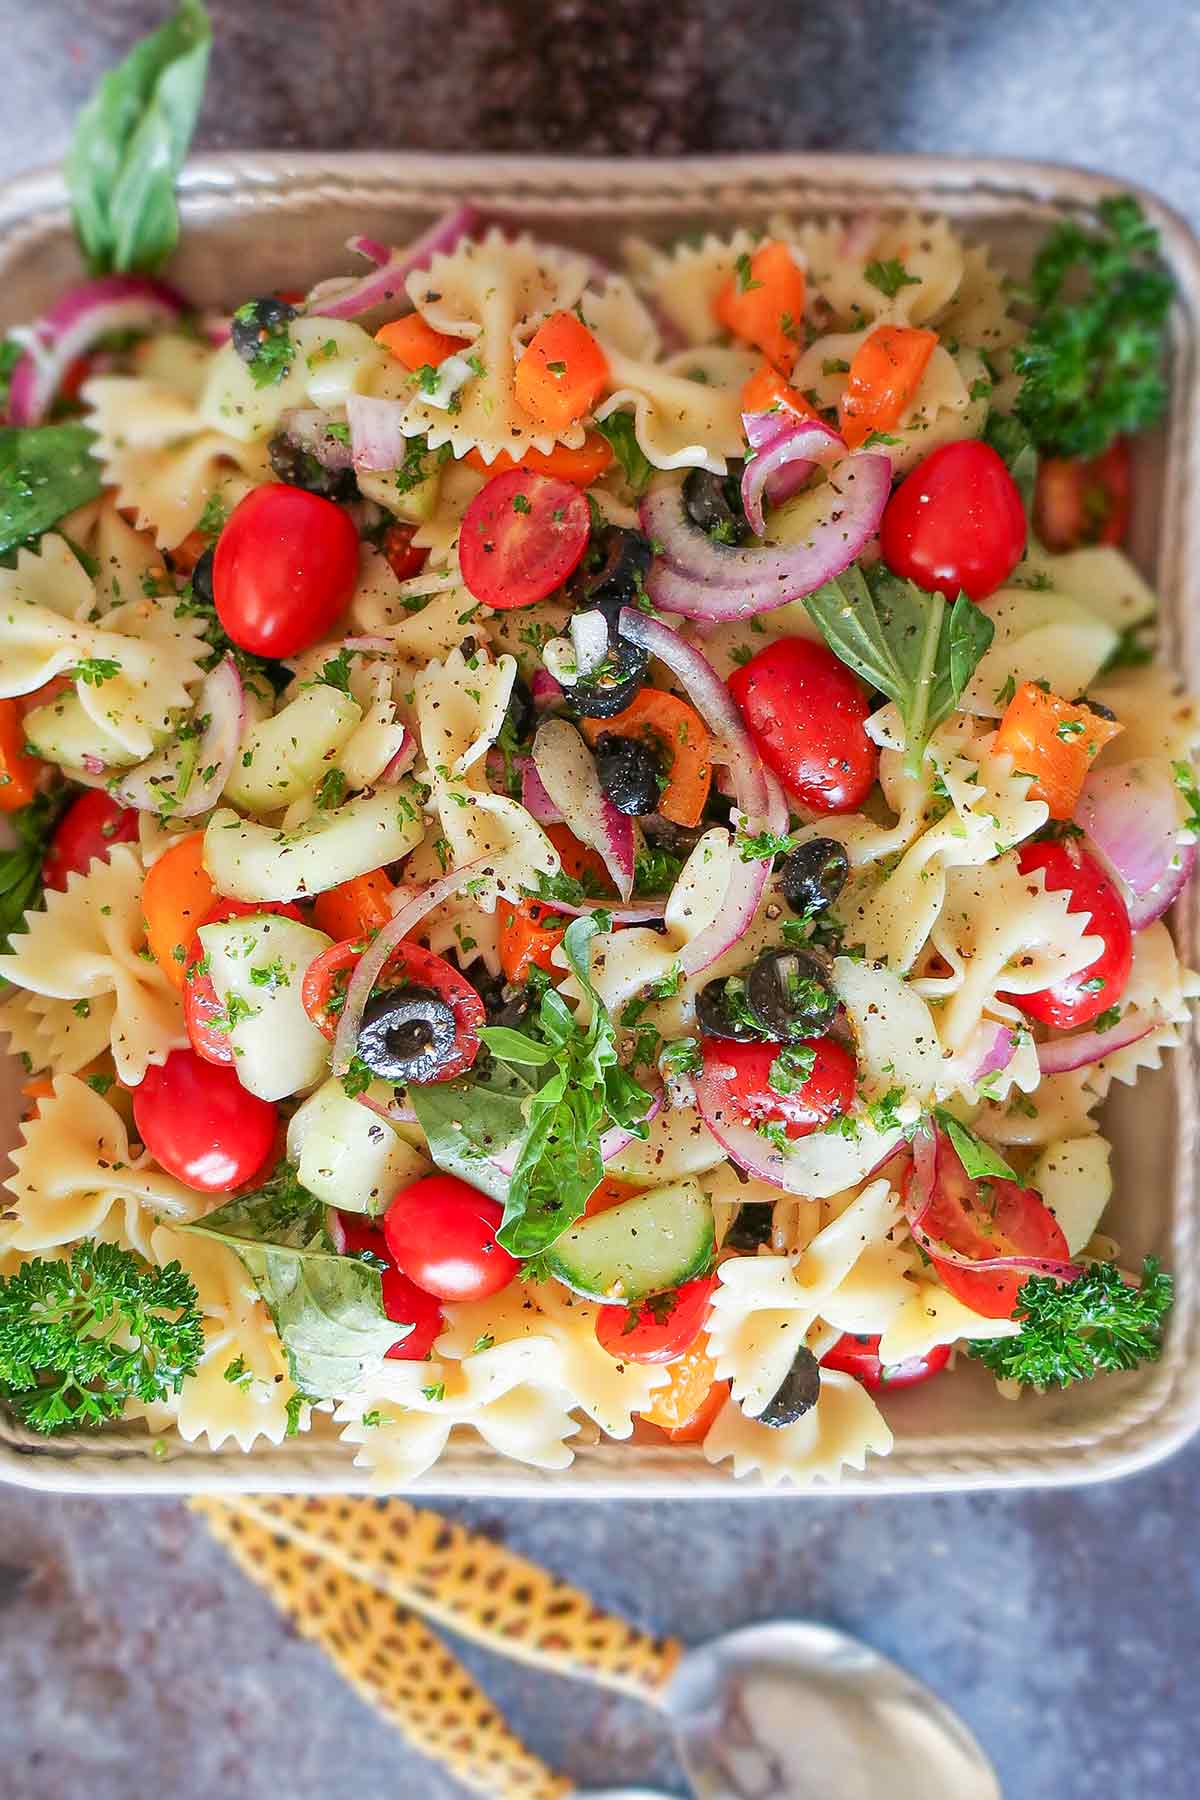 gluten free pasta and fresh veggies with vinaigrette salad